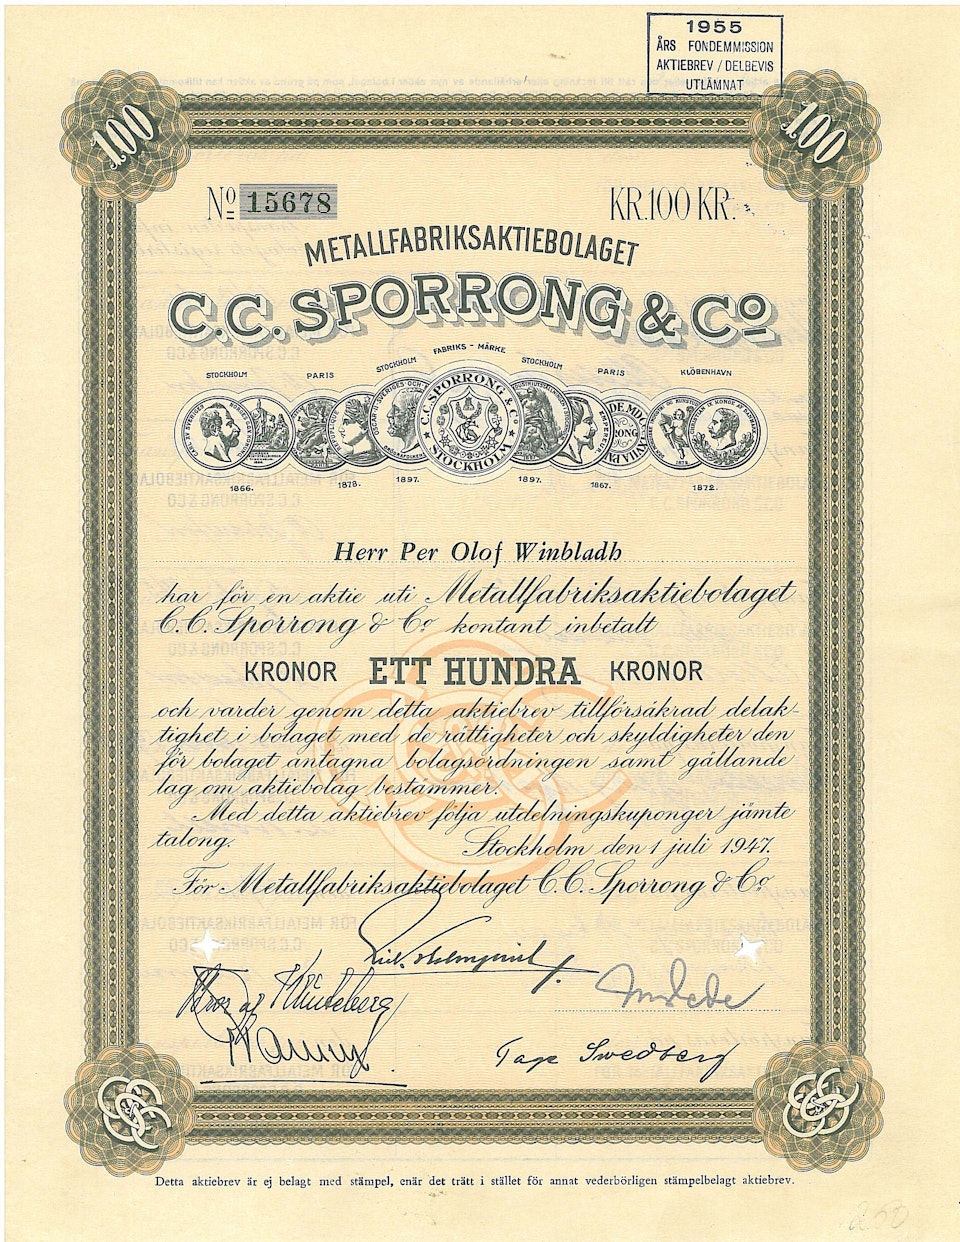 Metallfabriks AB C.C. Sporrong & Co, 1947